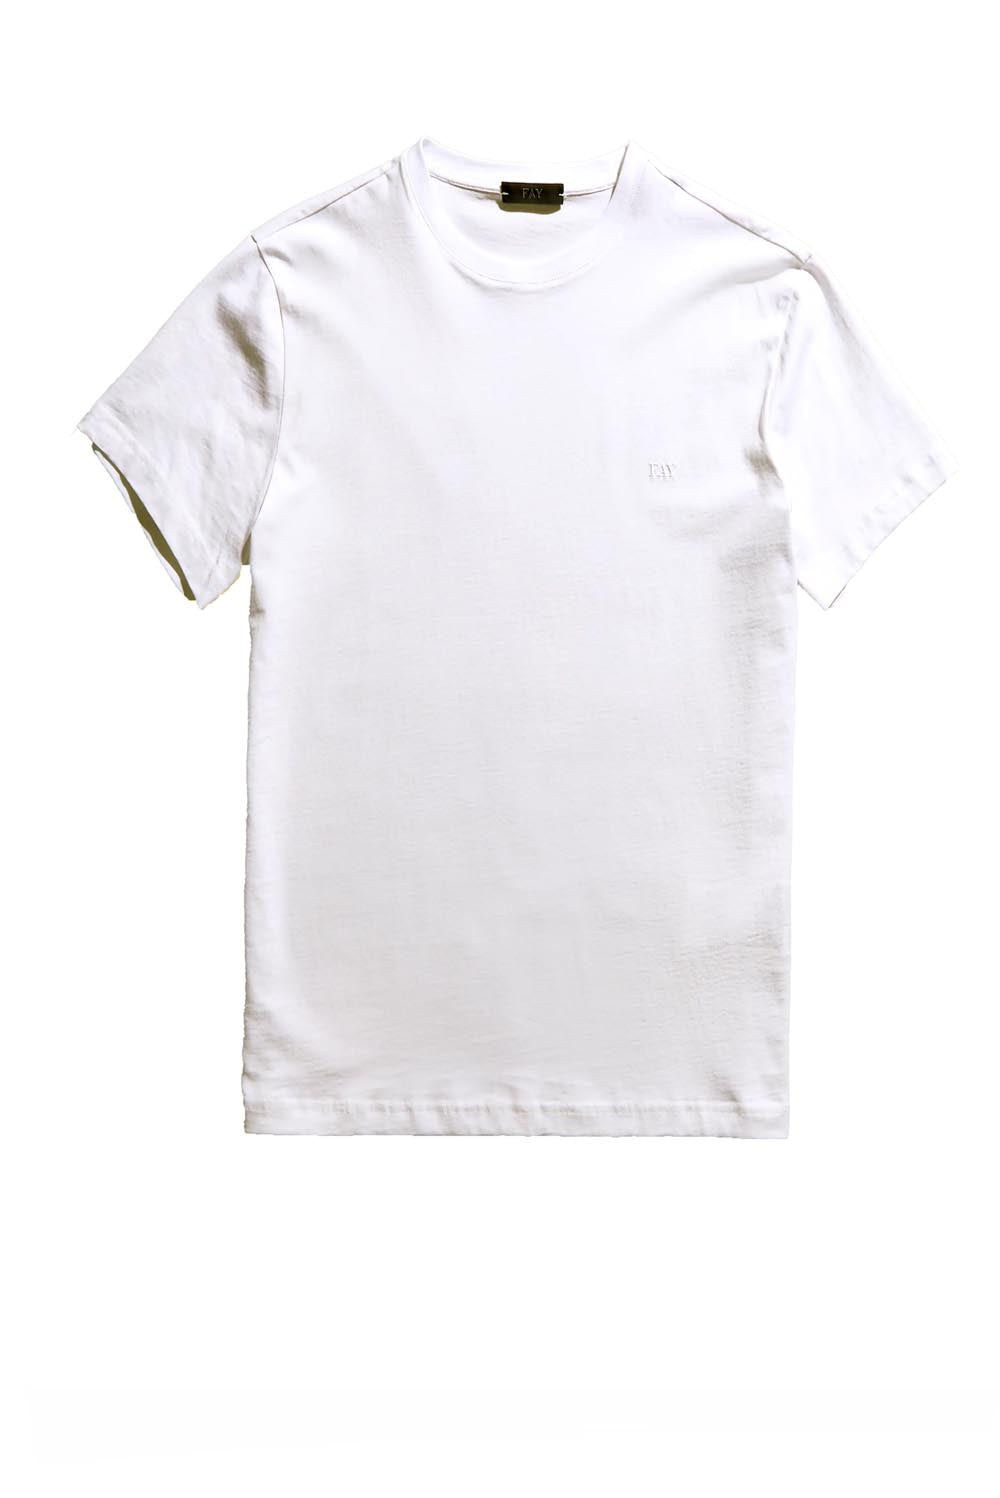  Fay T-shirt White Uomo - 1